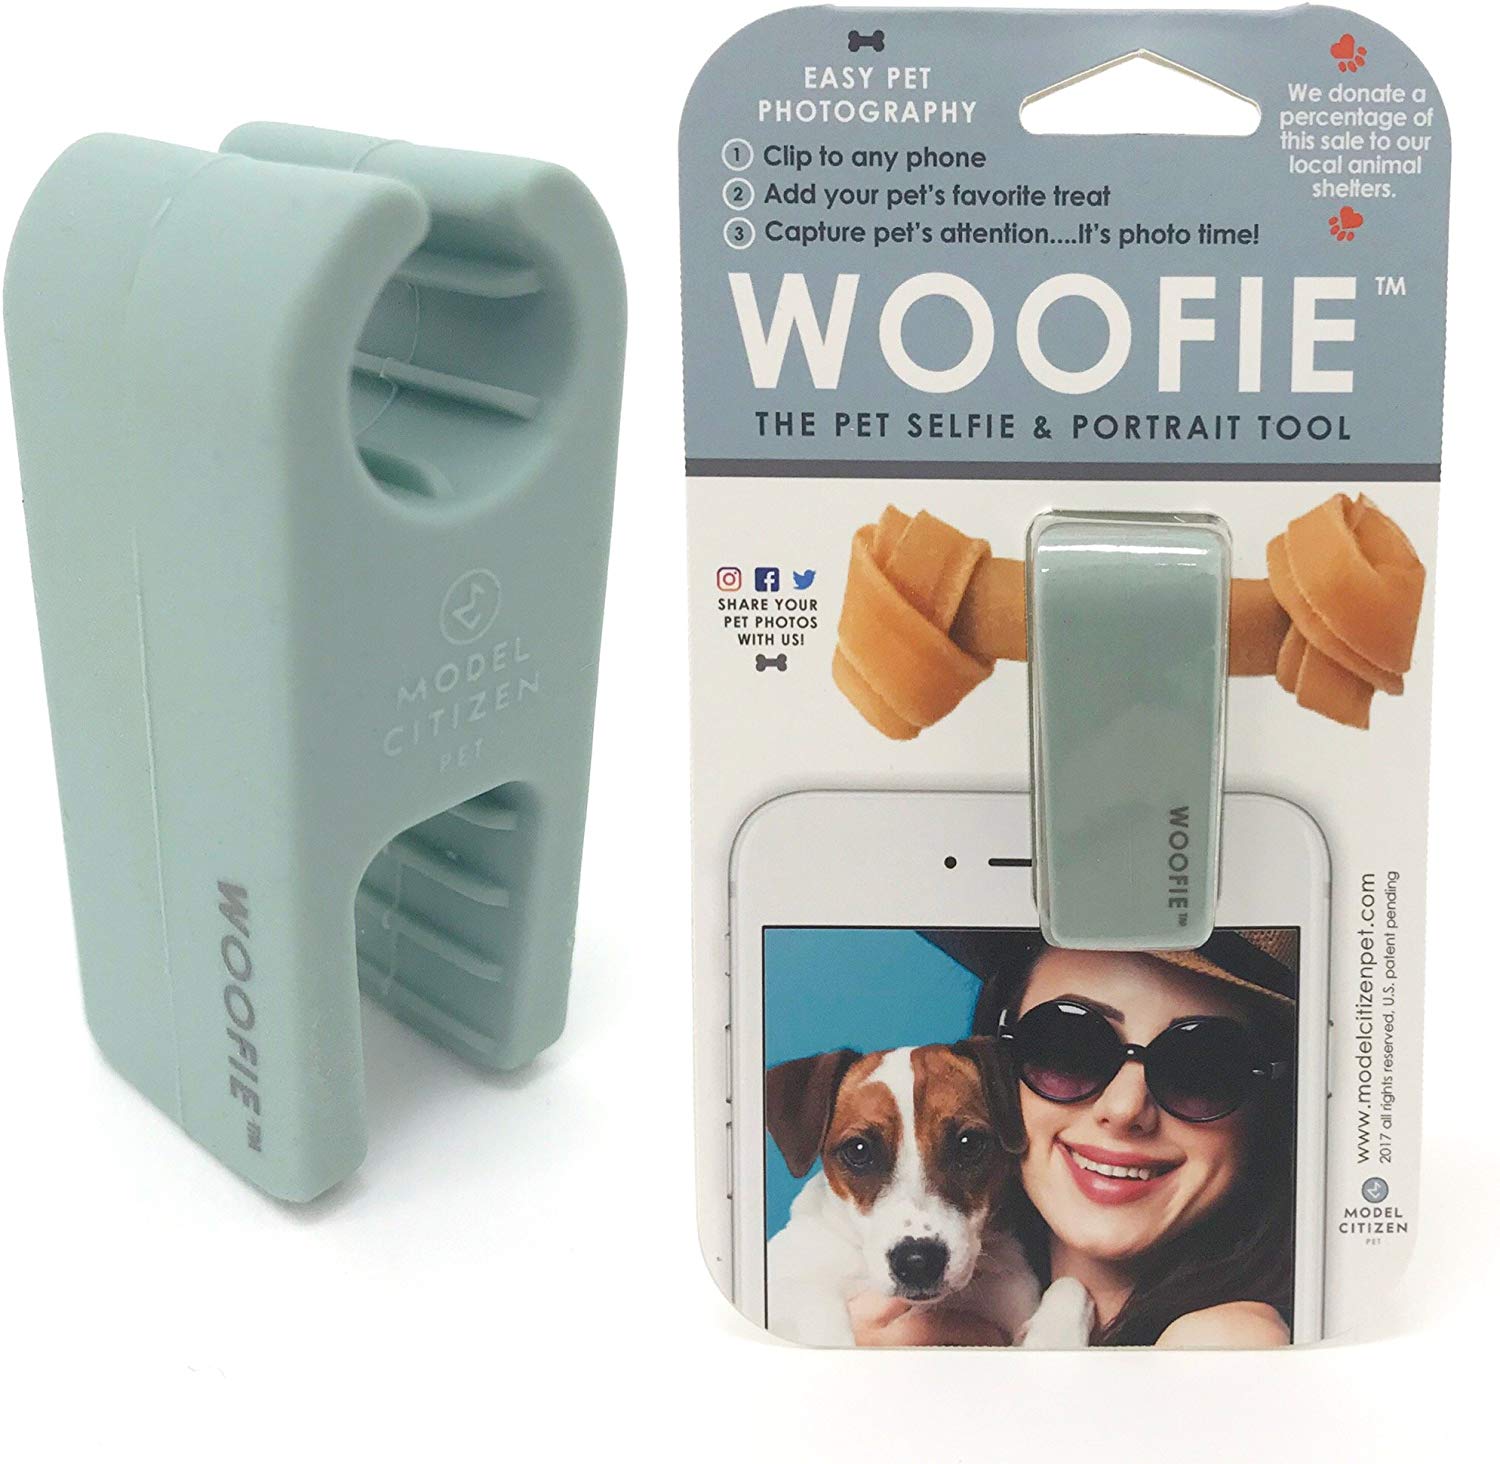 WOOFIE - The Pet Selfie & Portrait Tool